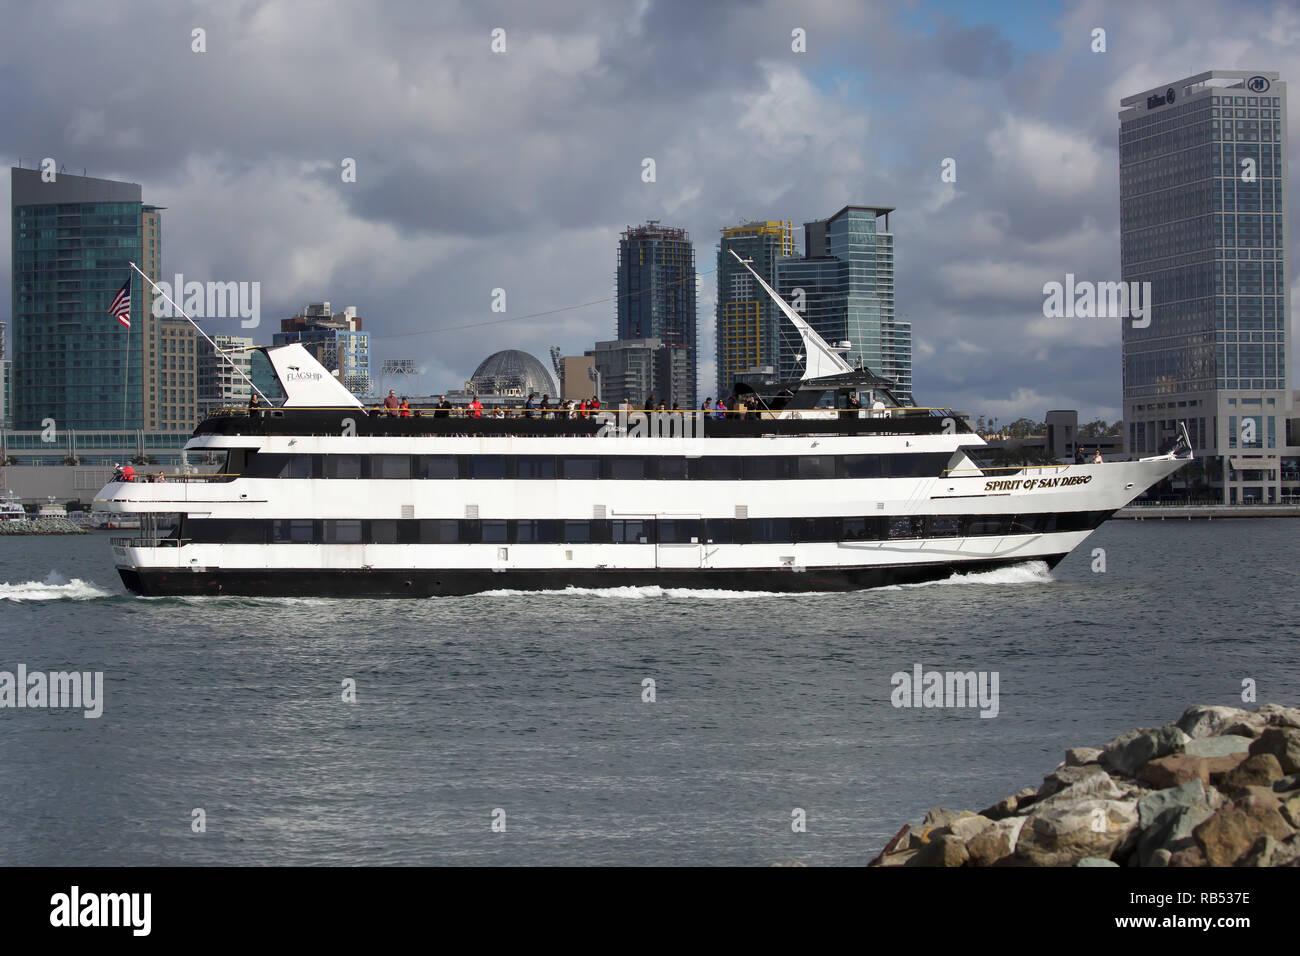 Spirit of San Diego Harbour cruise boat passes coronado Stock